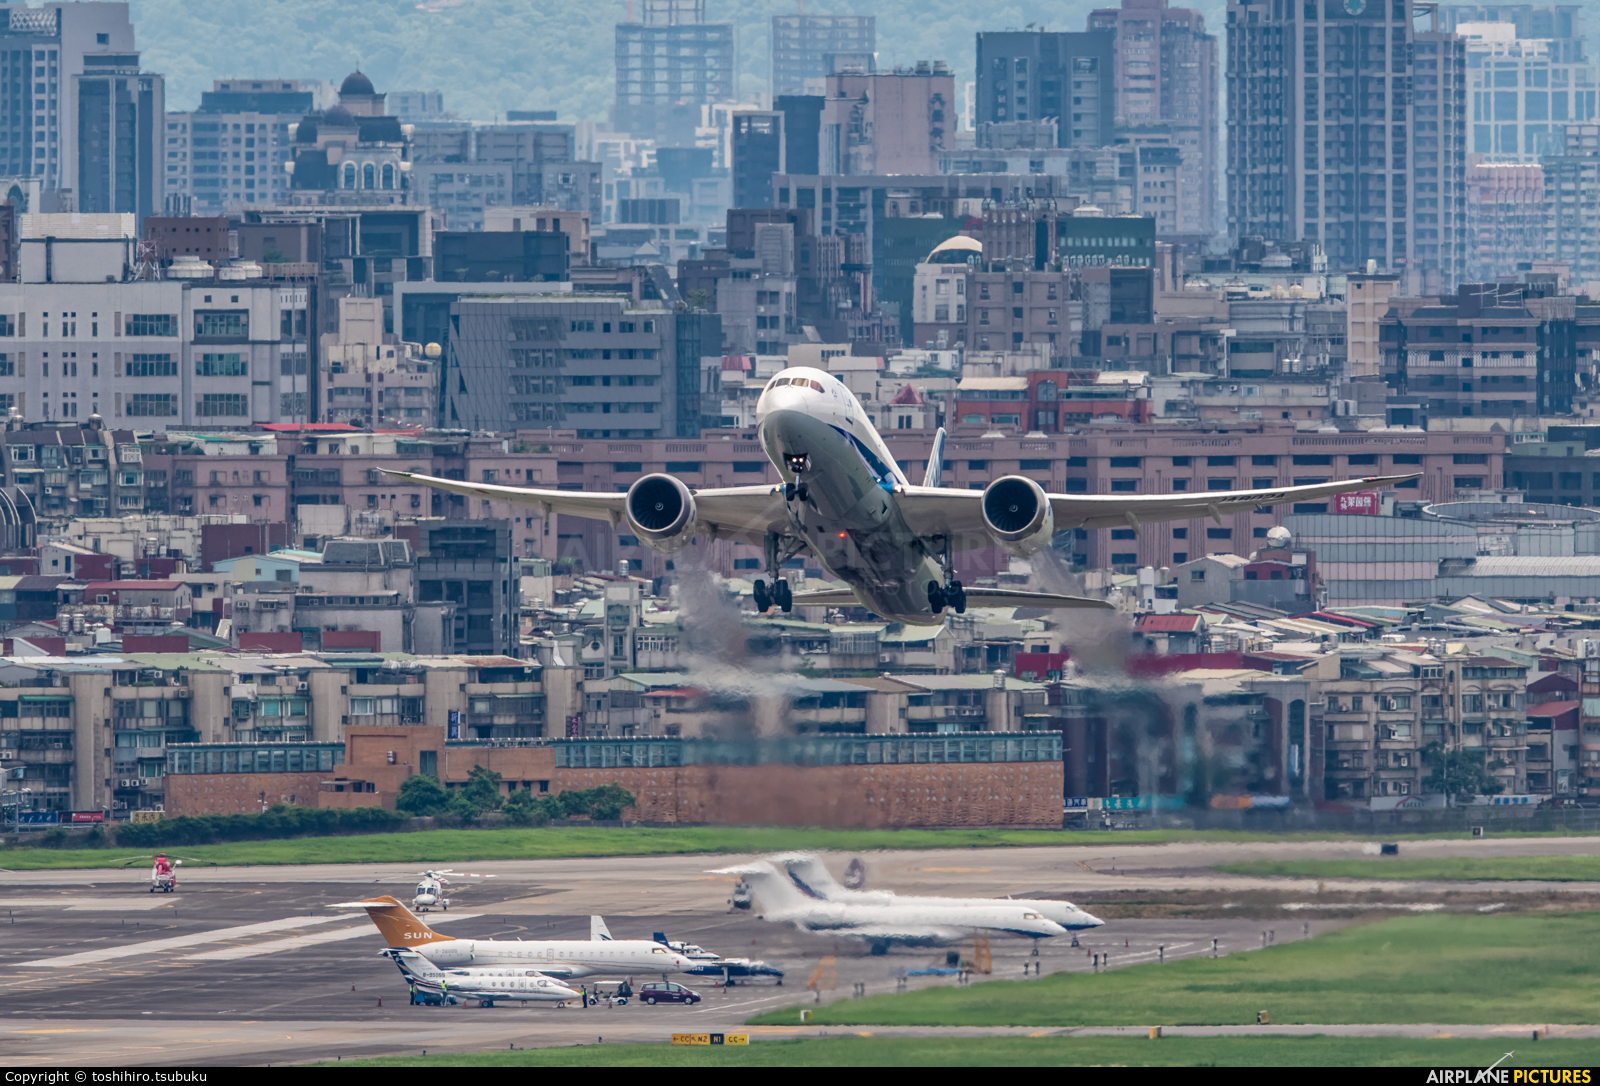 ANA - All Nippon Airways JA802A aircraft at Taipei Sung Shan/Songshan Airport